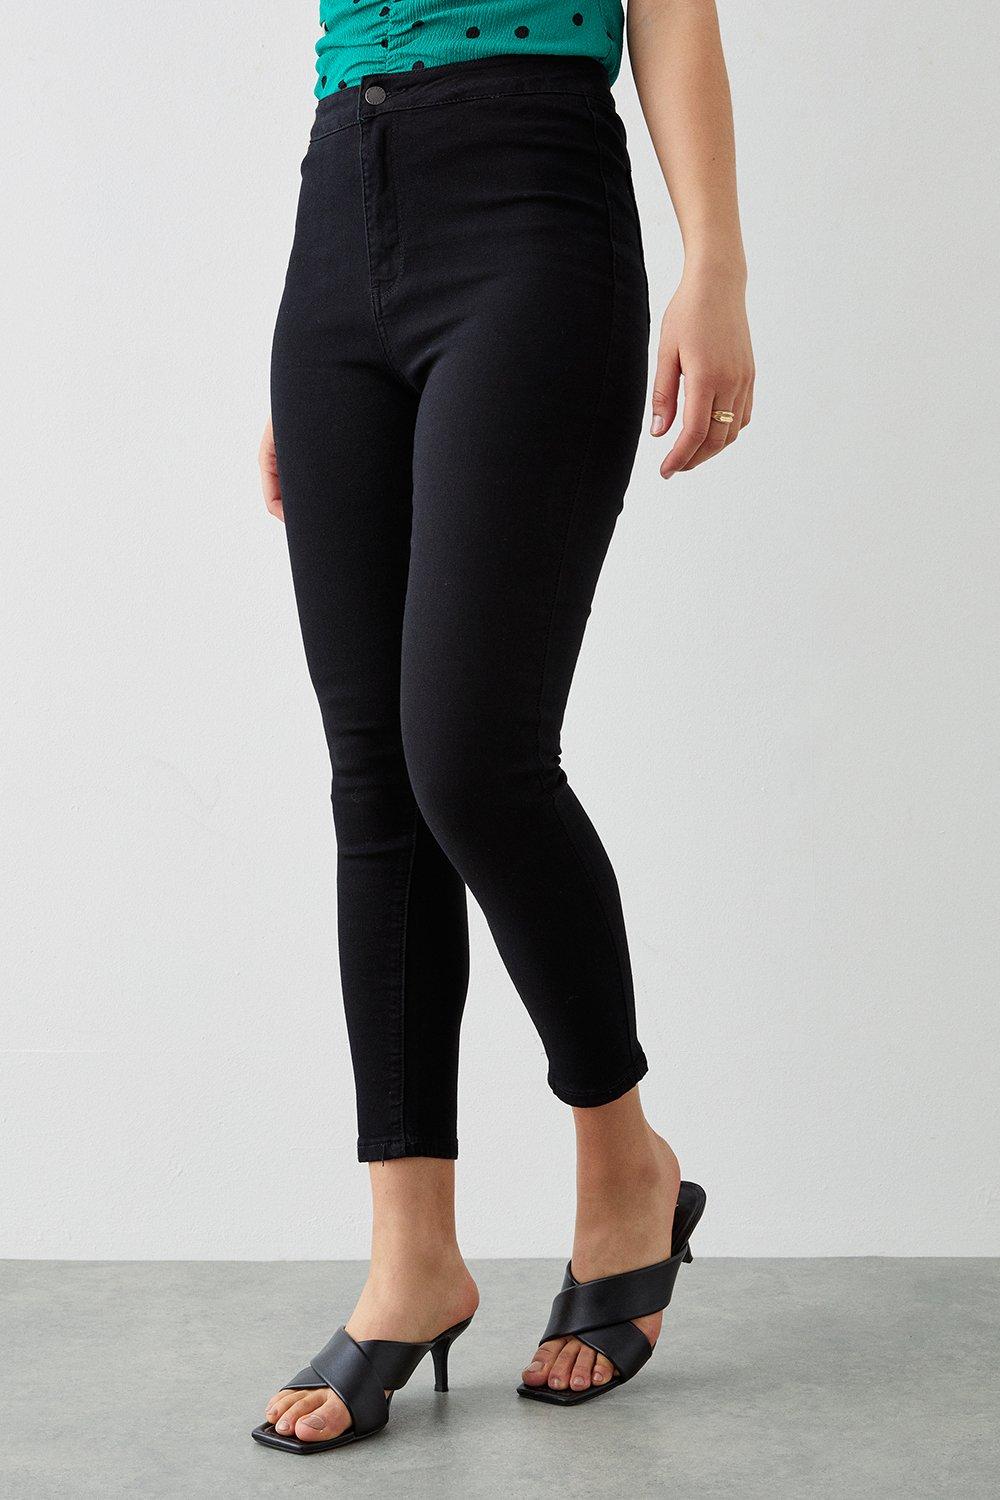 Women’s High Waist Ankle Grazer Skinny Jeans - black - 6